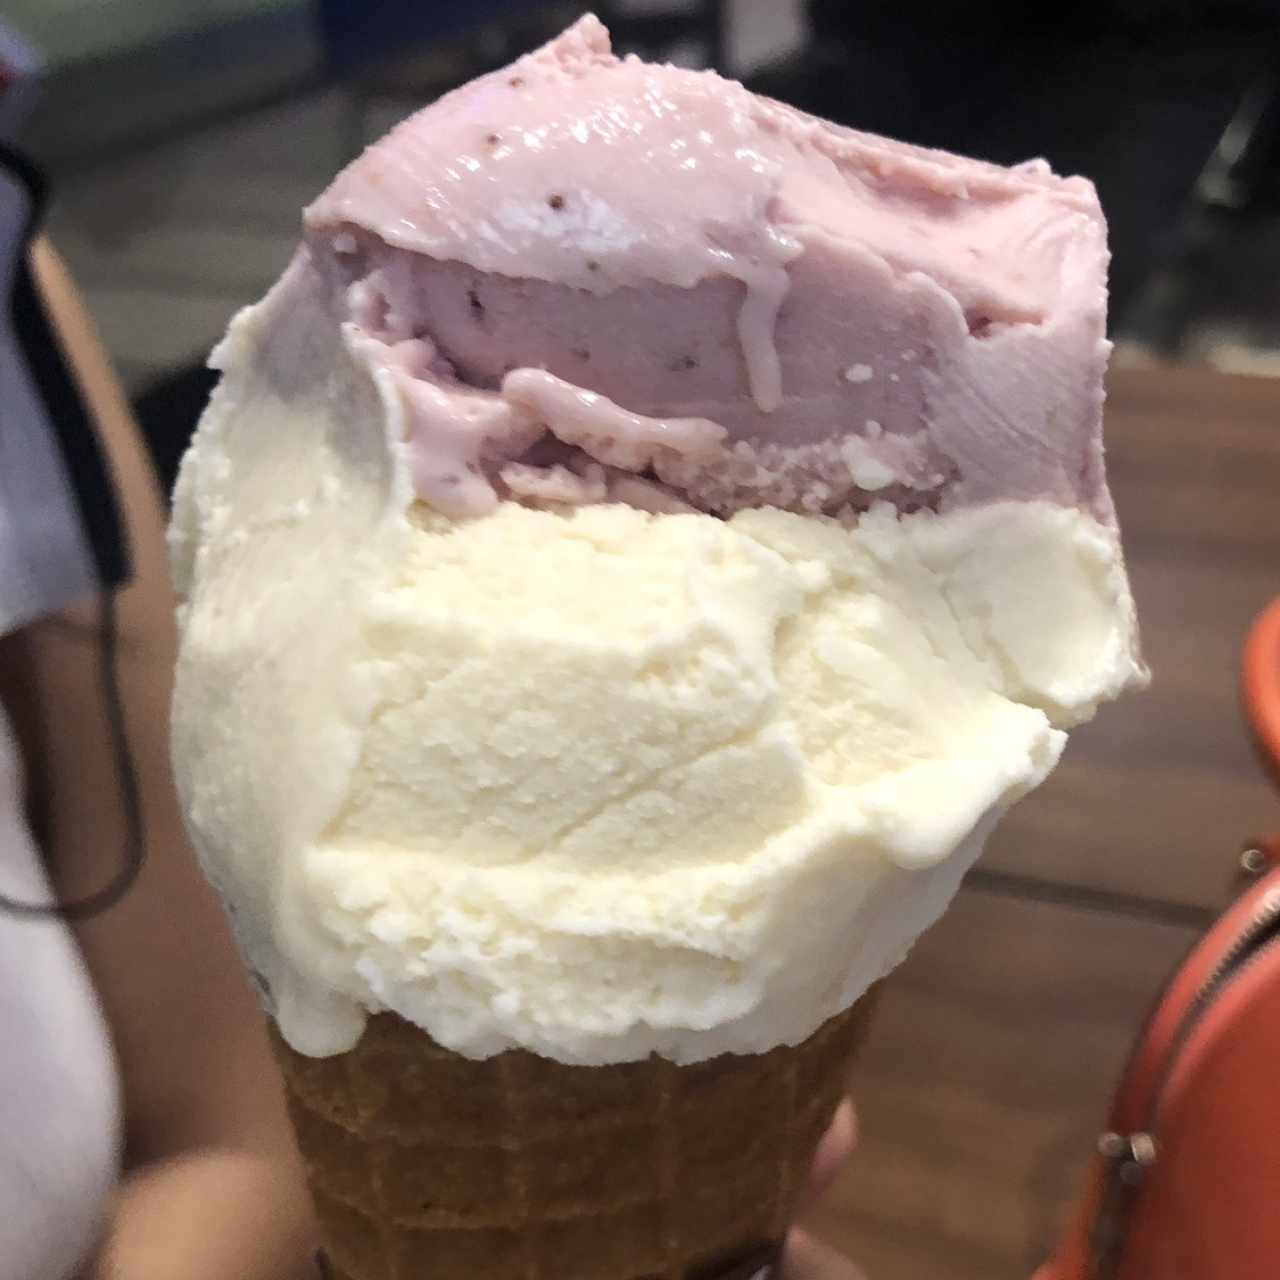 Strawberry and vanilla ice cream